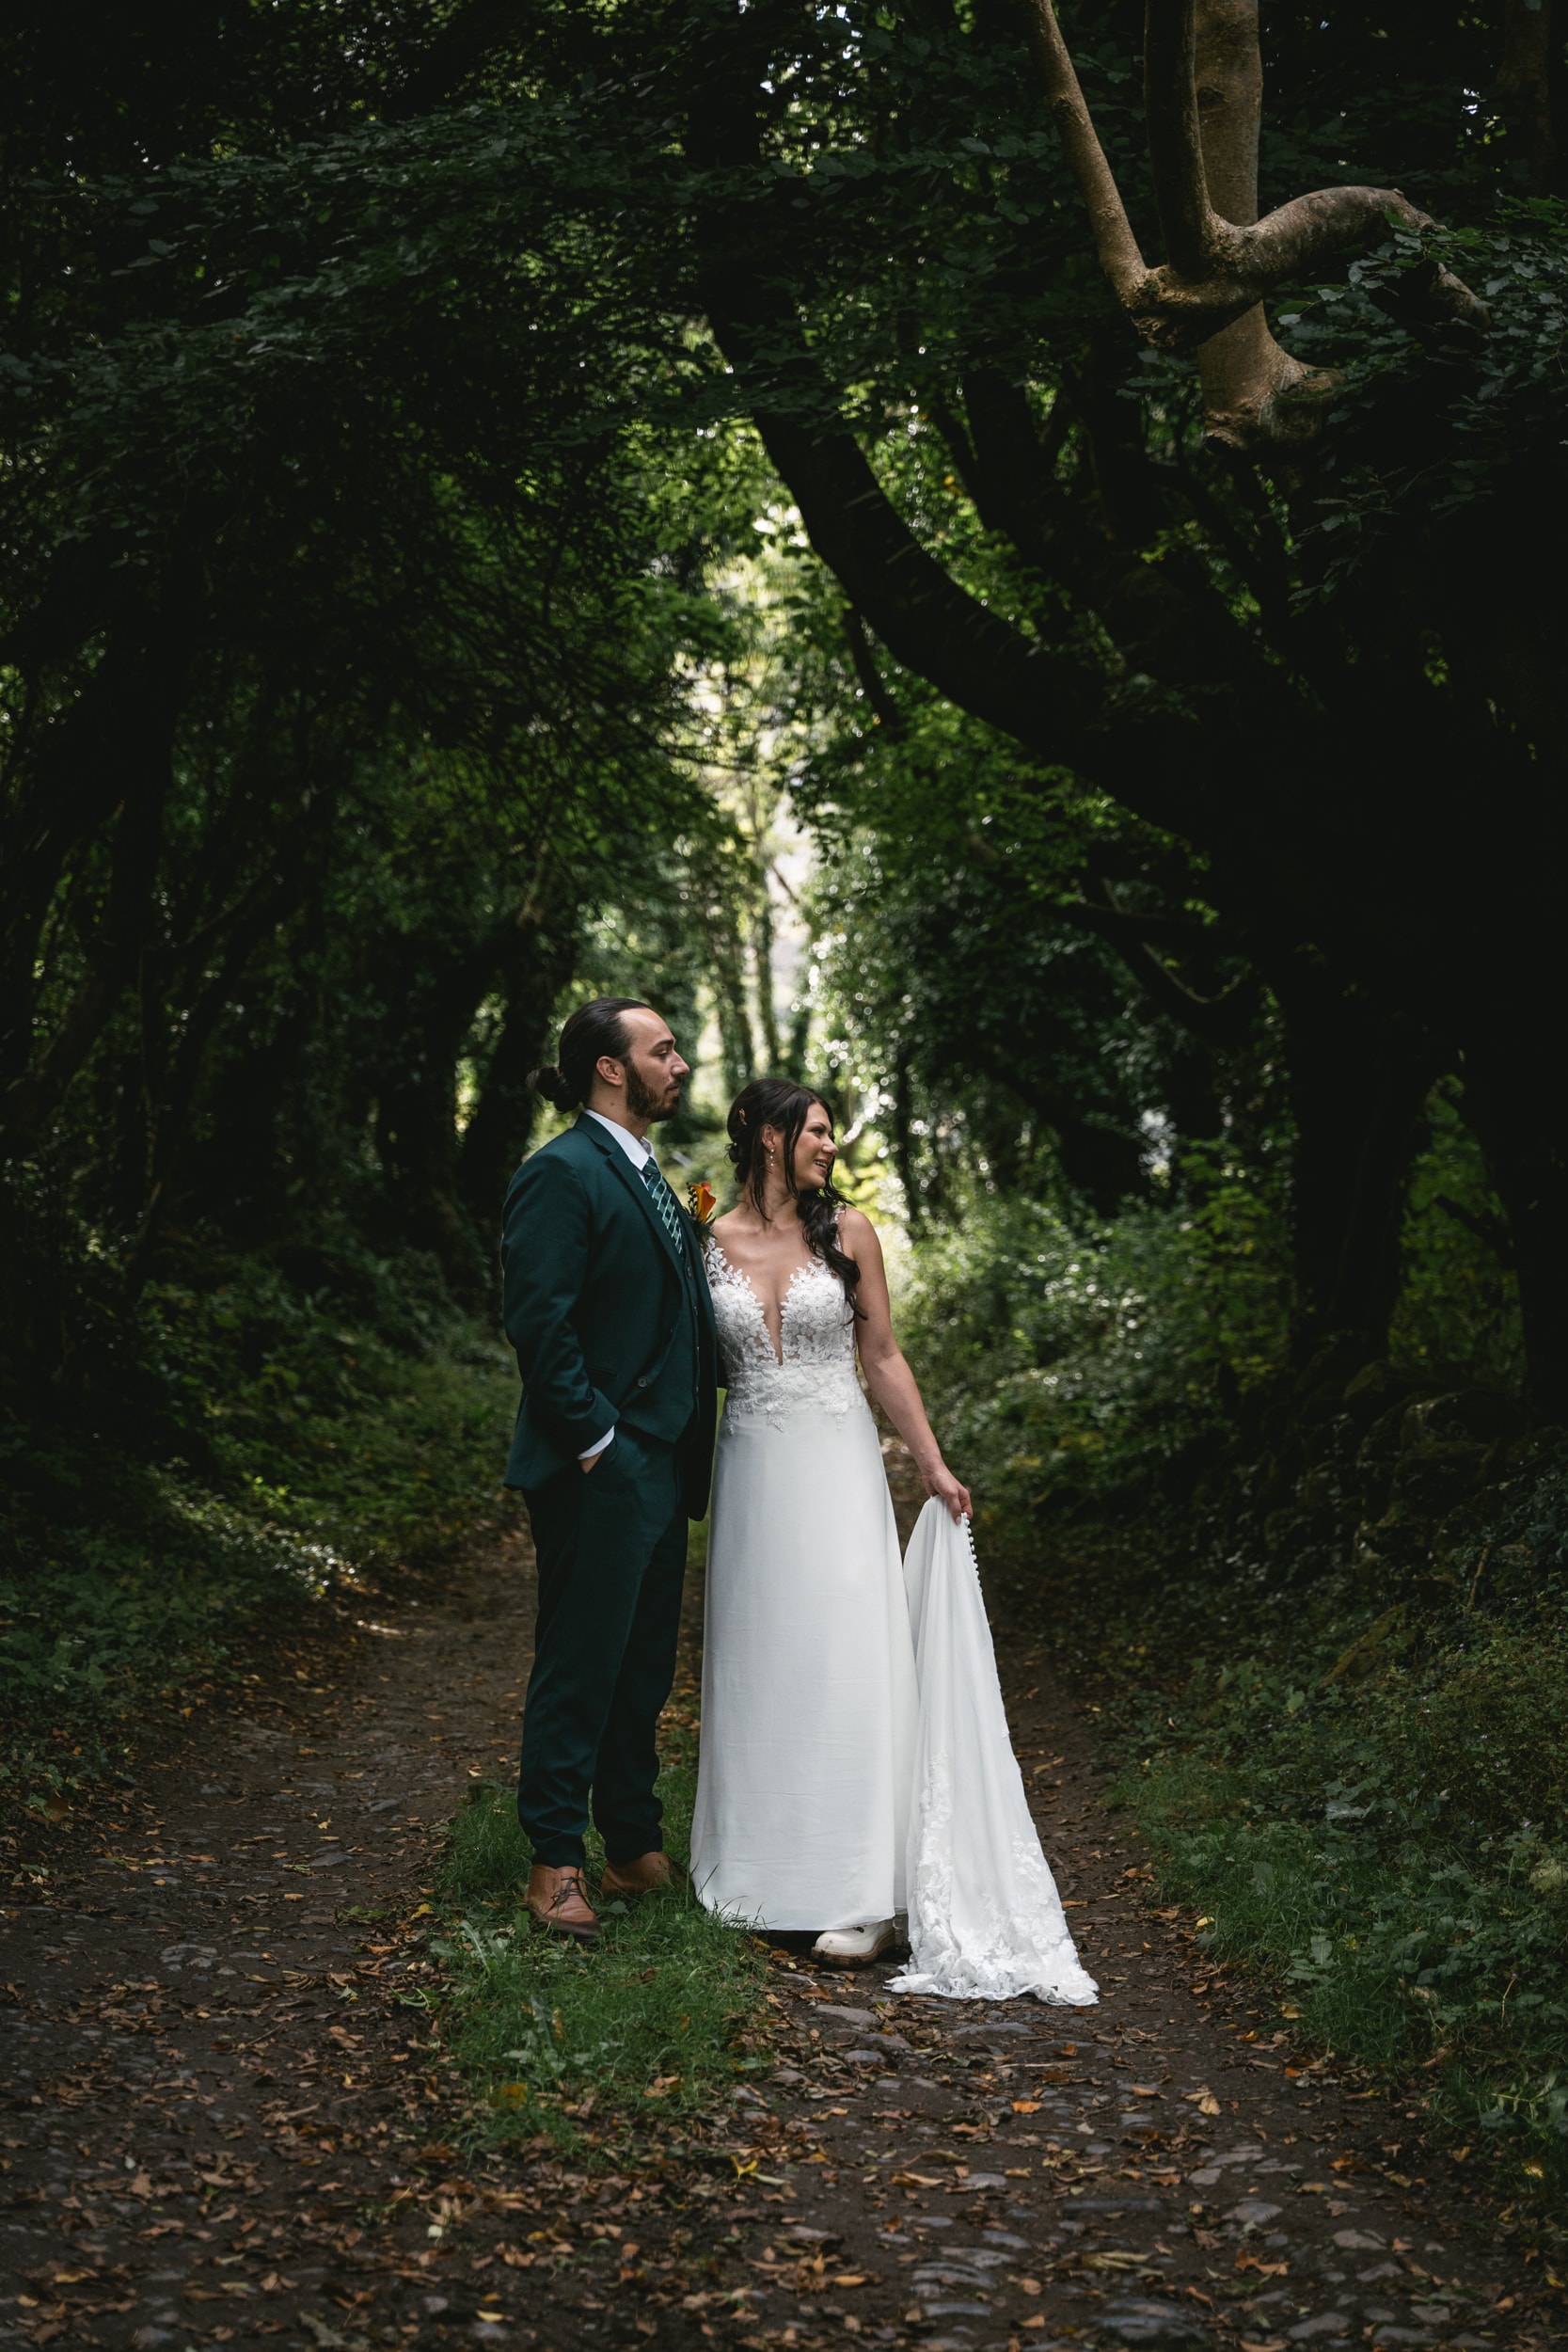 Irish elopement bliss: Capturing love against the misty cliffs.